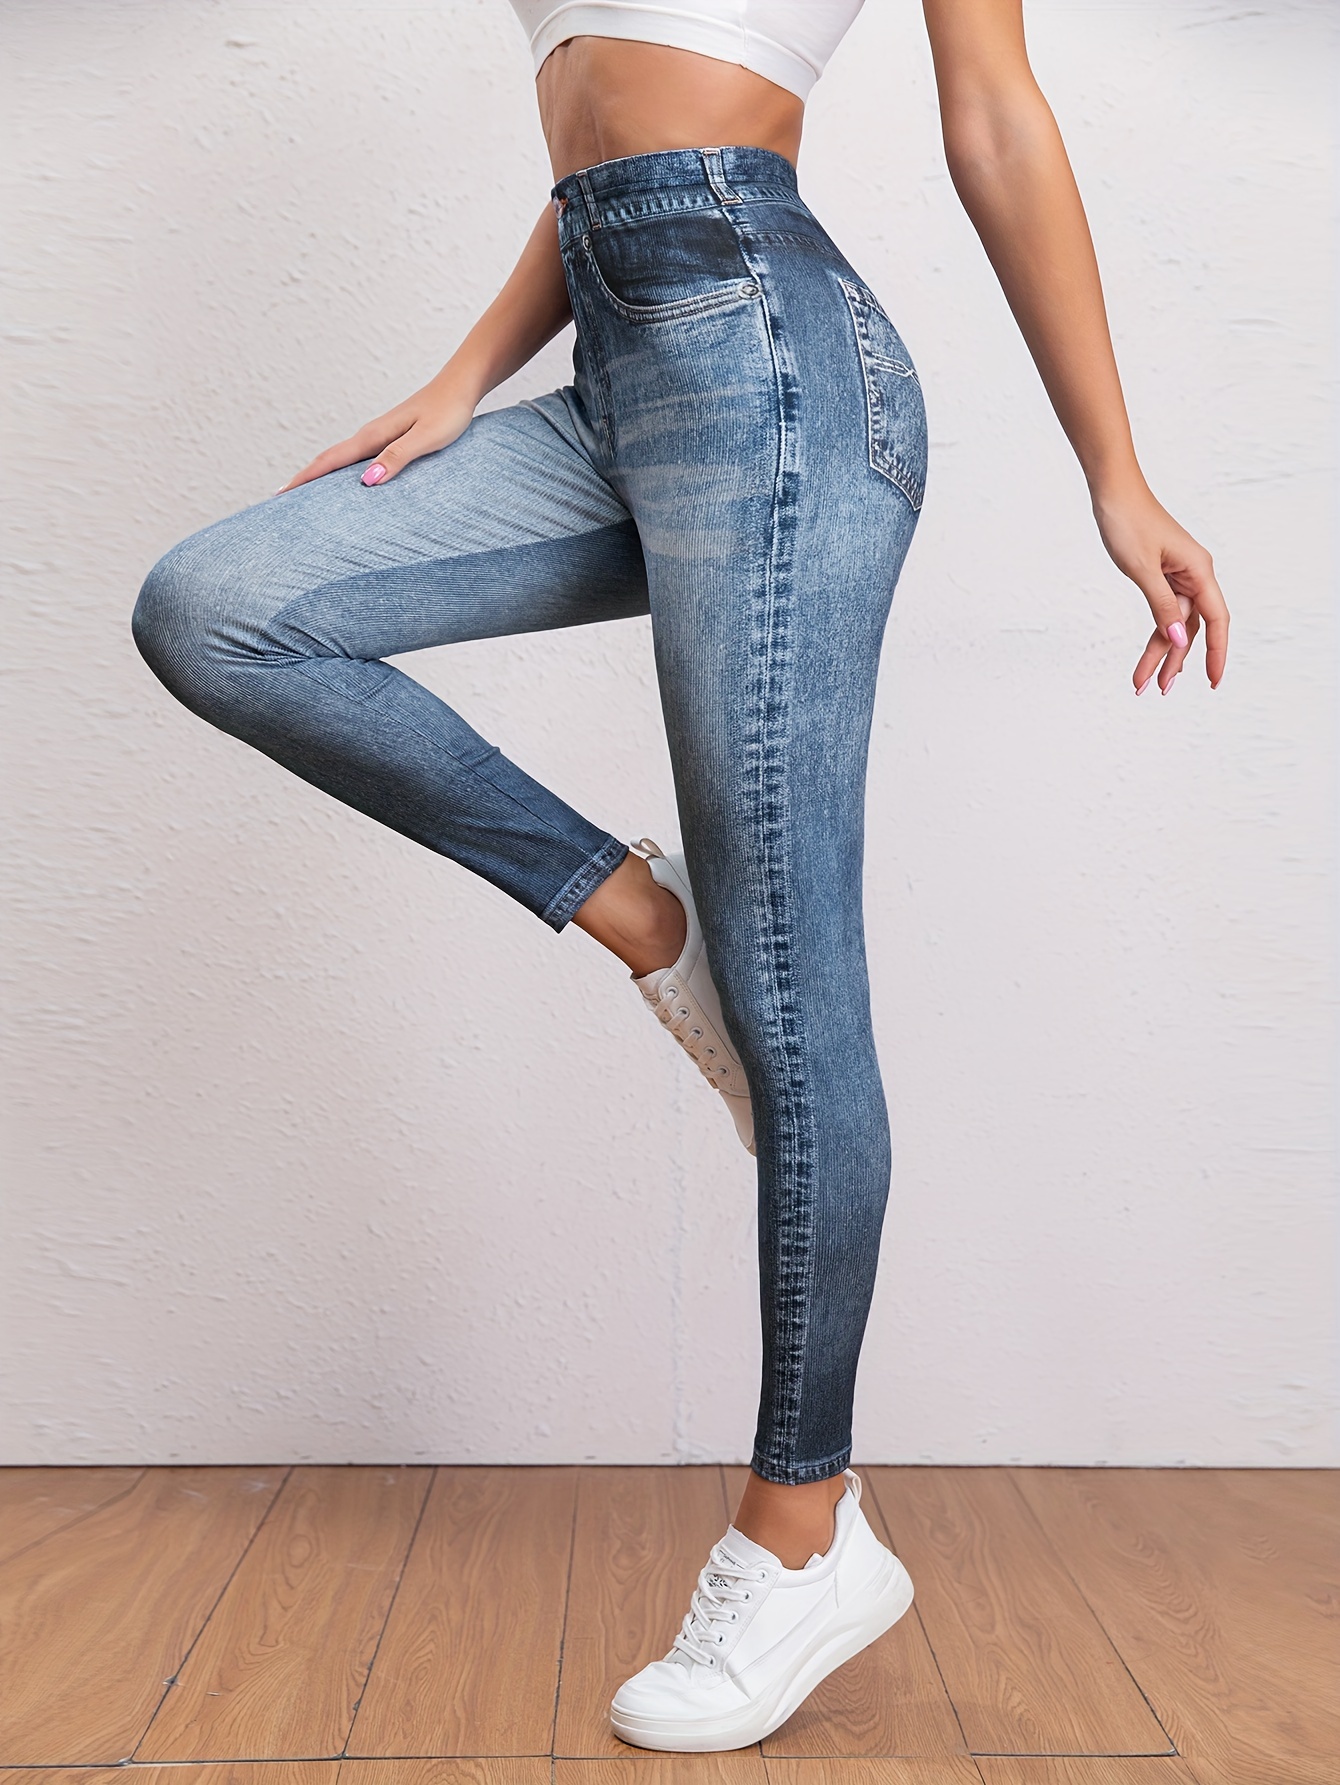 Women Denim Pants Fake Jeans High Waisted Stretch Skinny Leggings Jeggings